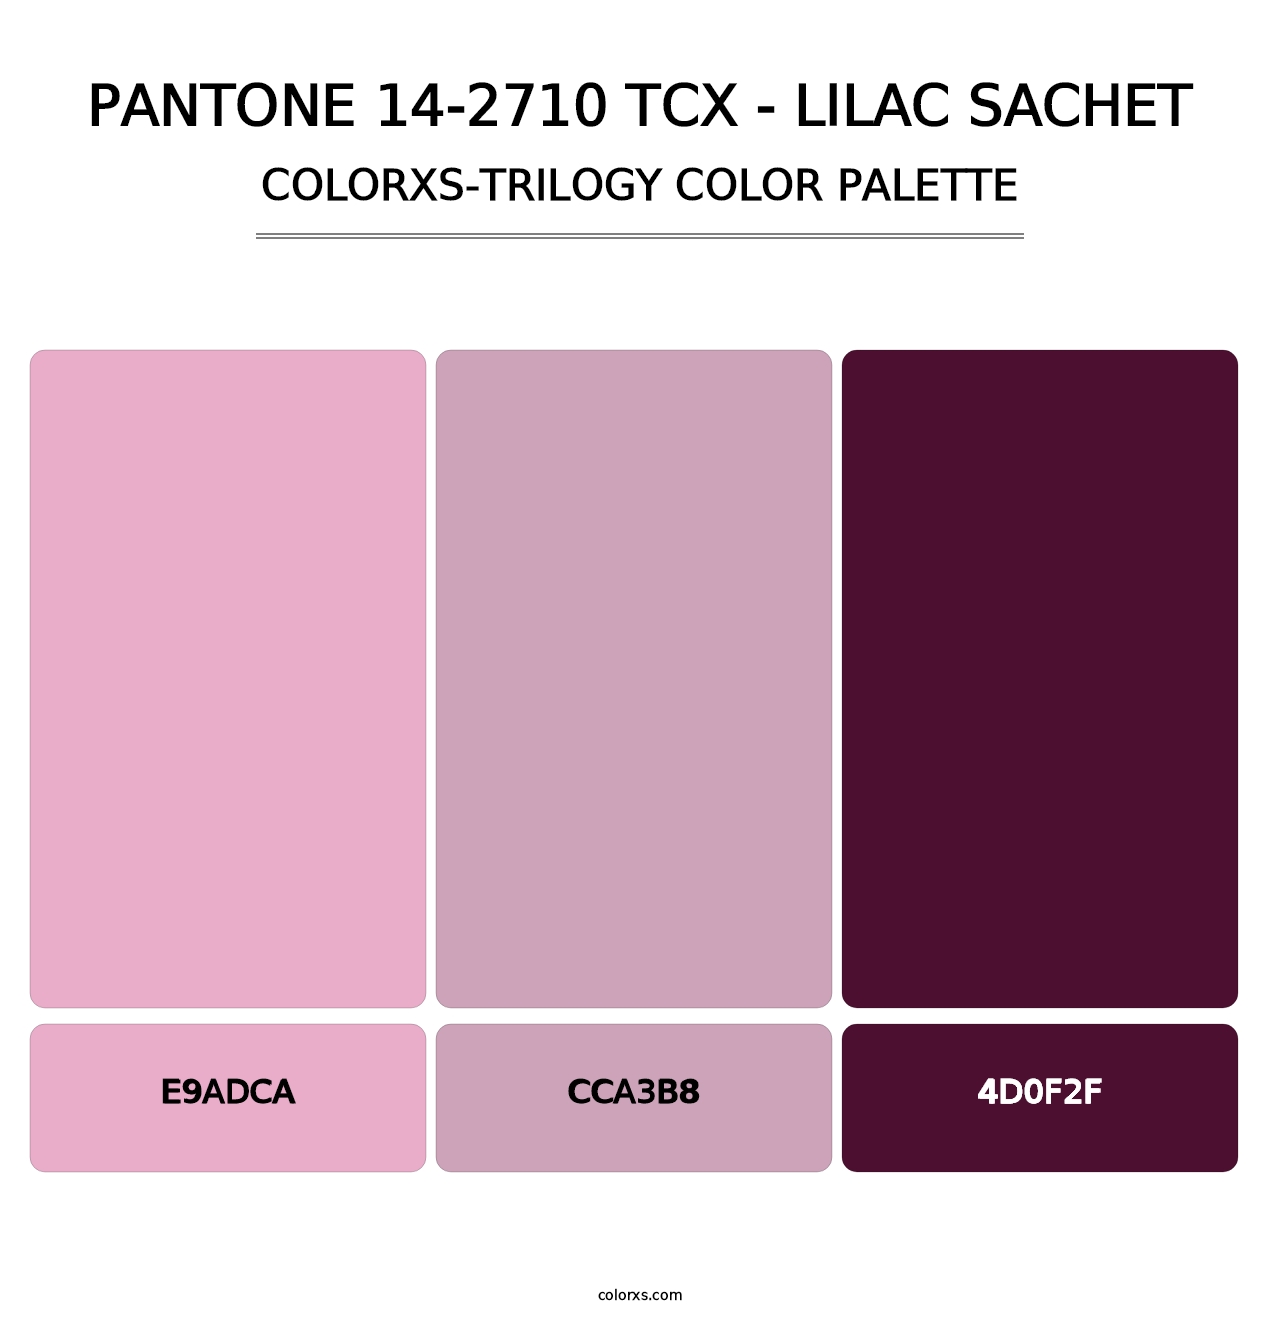 PANTONE 14-2710 TCX - Lilac Sachet - Colorxs Trilogy Palette